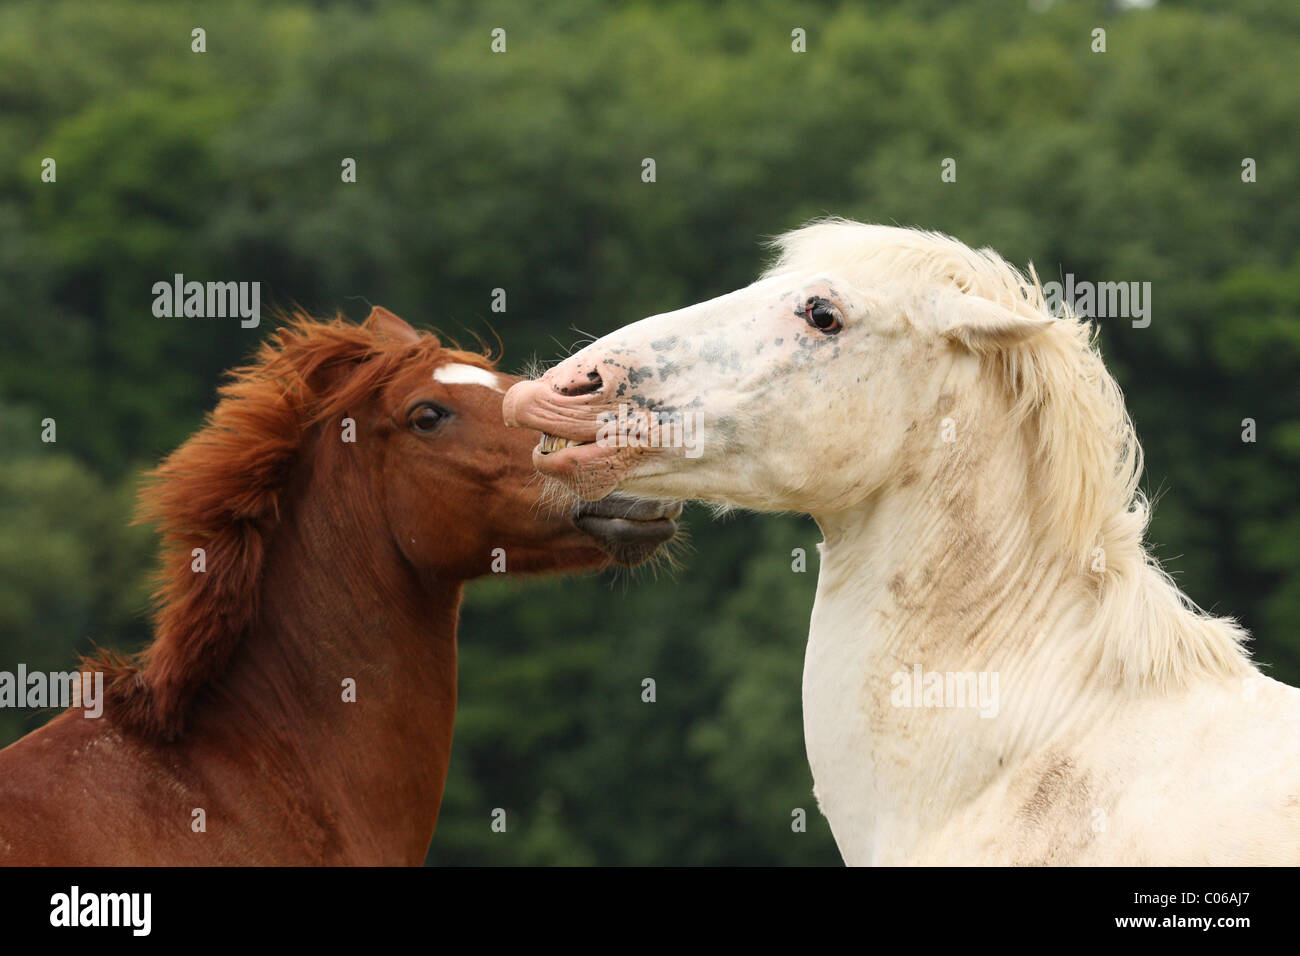 aggressive horse behavior